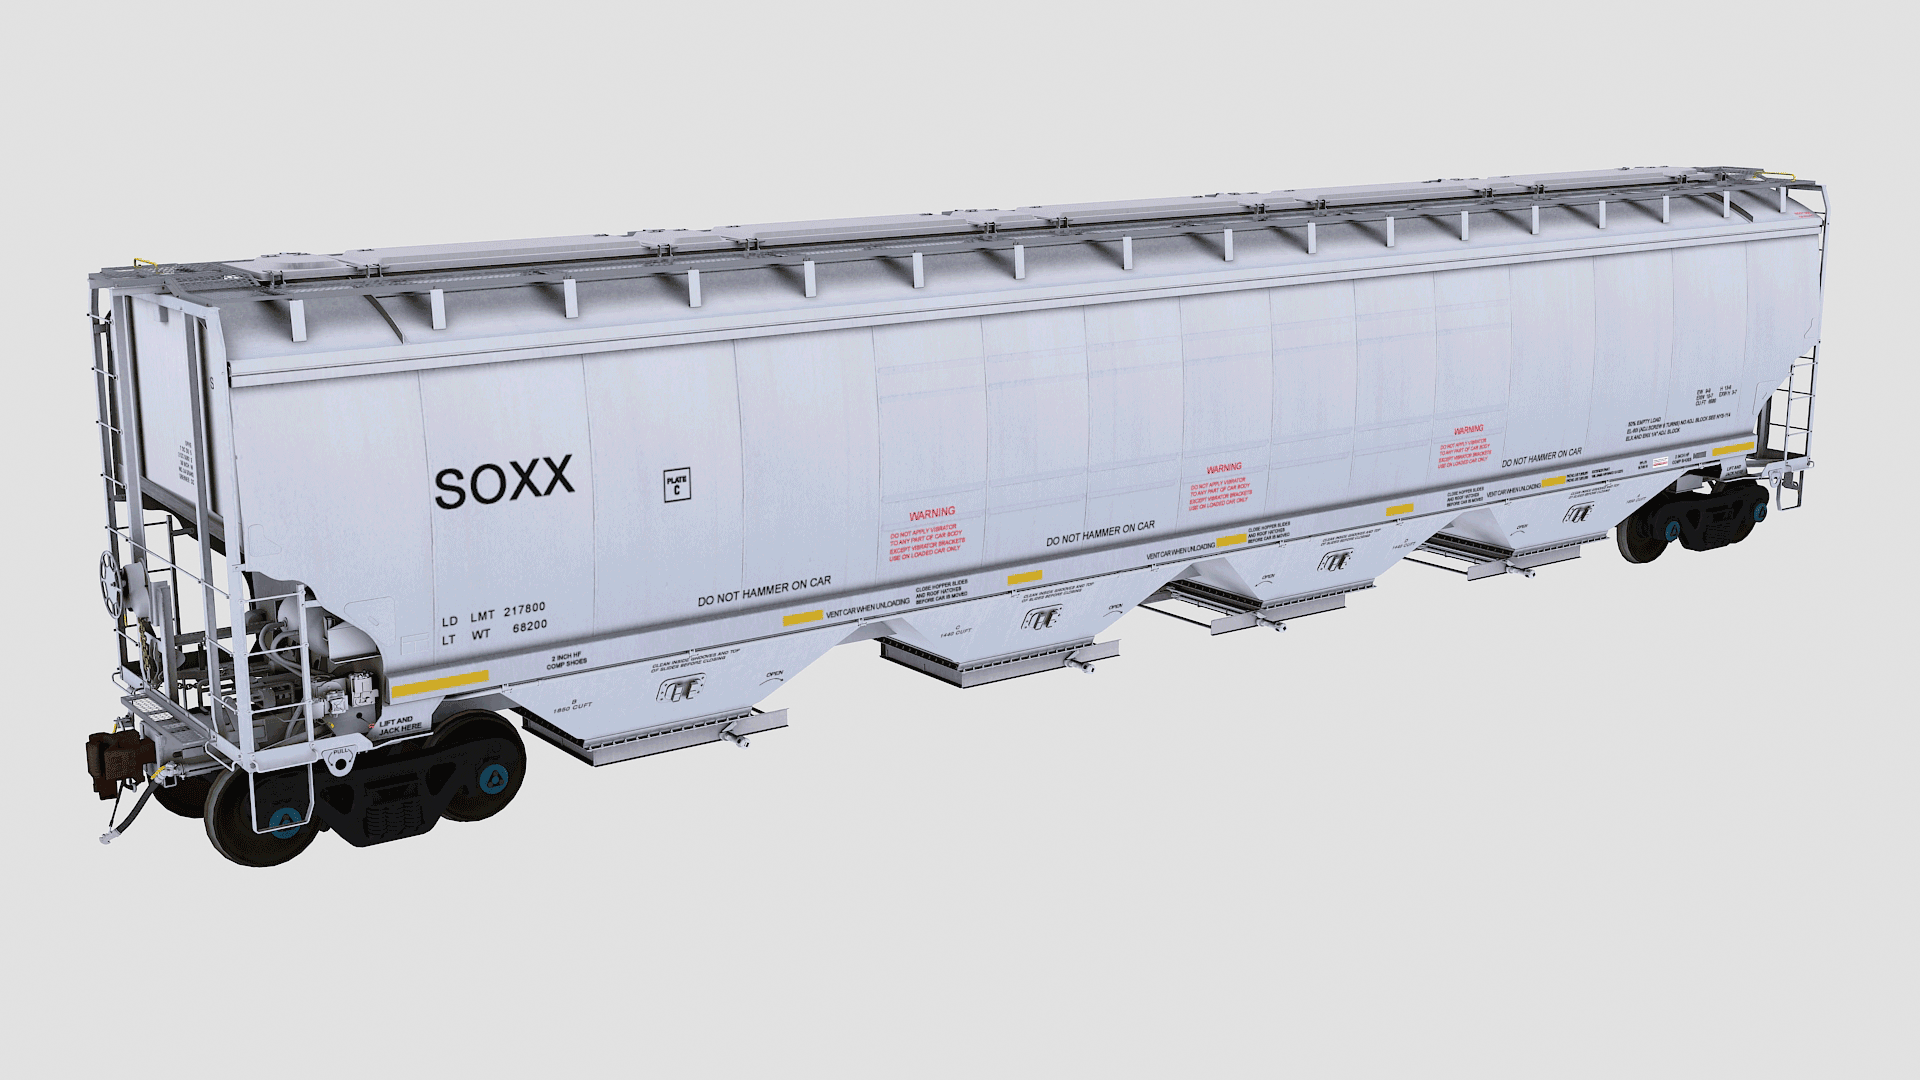 Soxx a digital scale prototype model